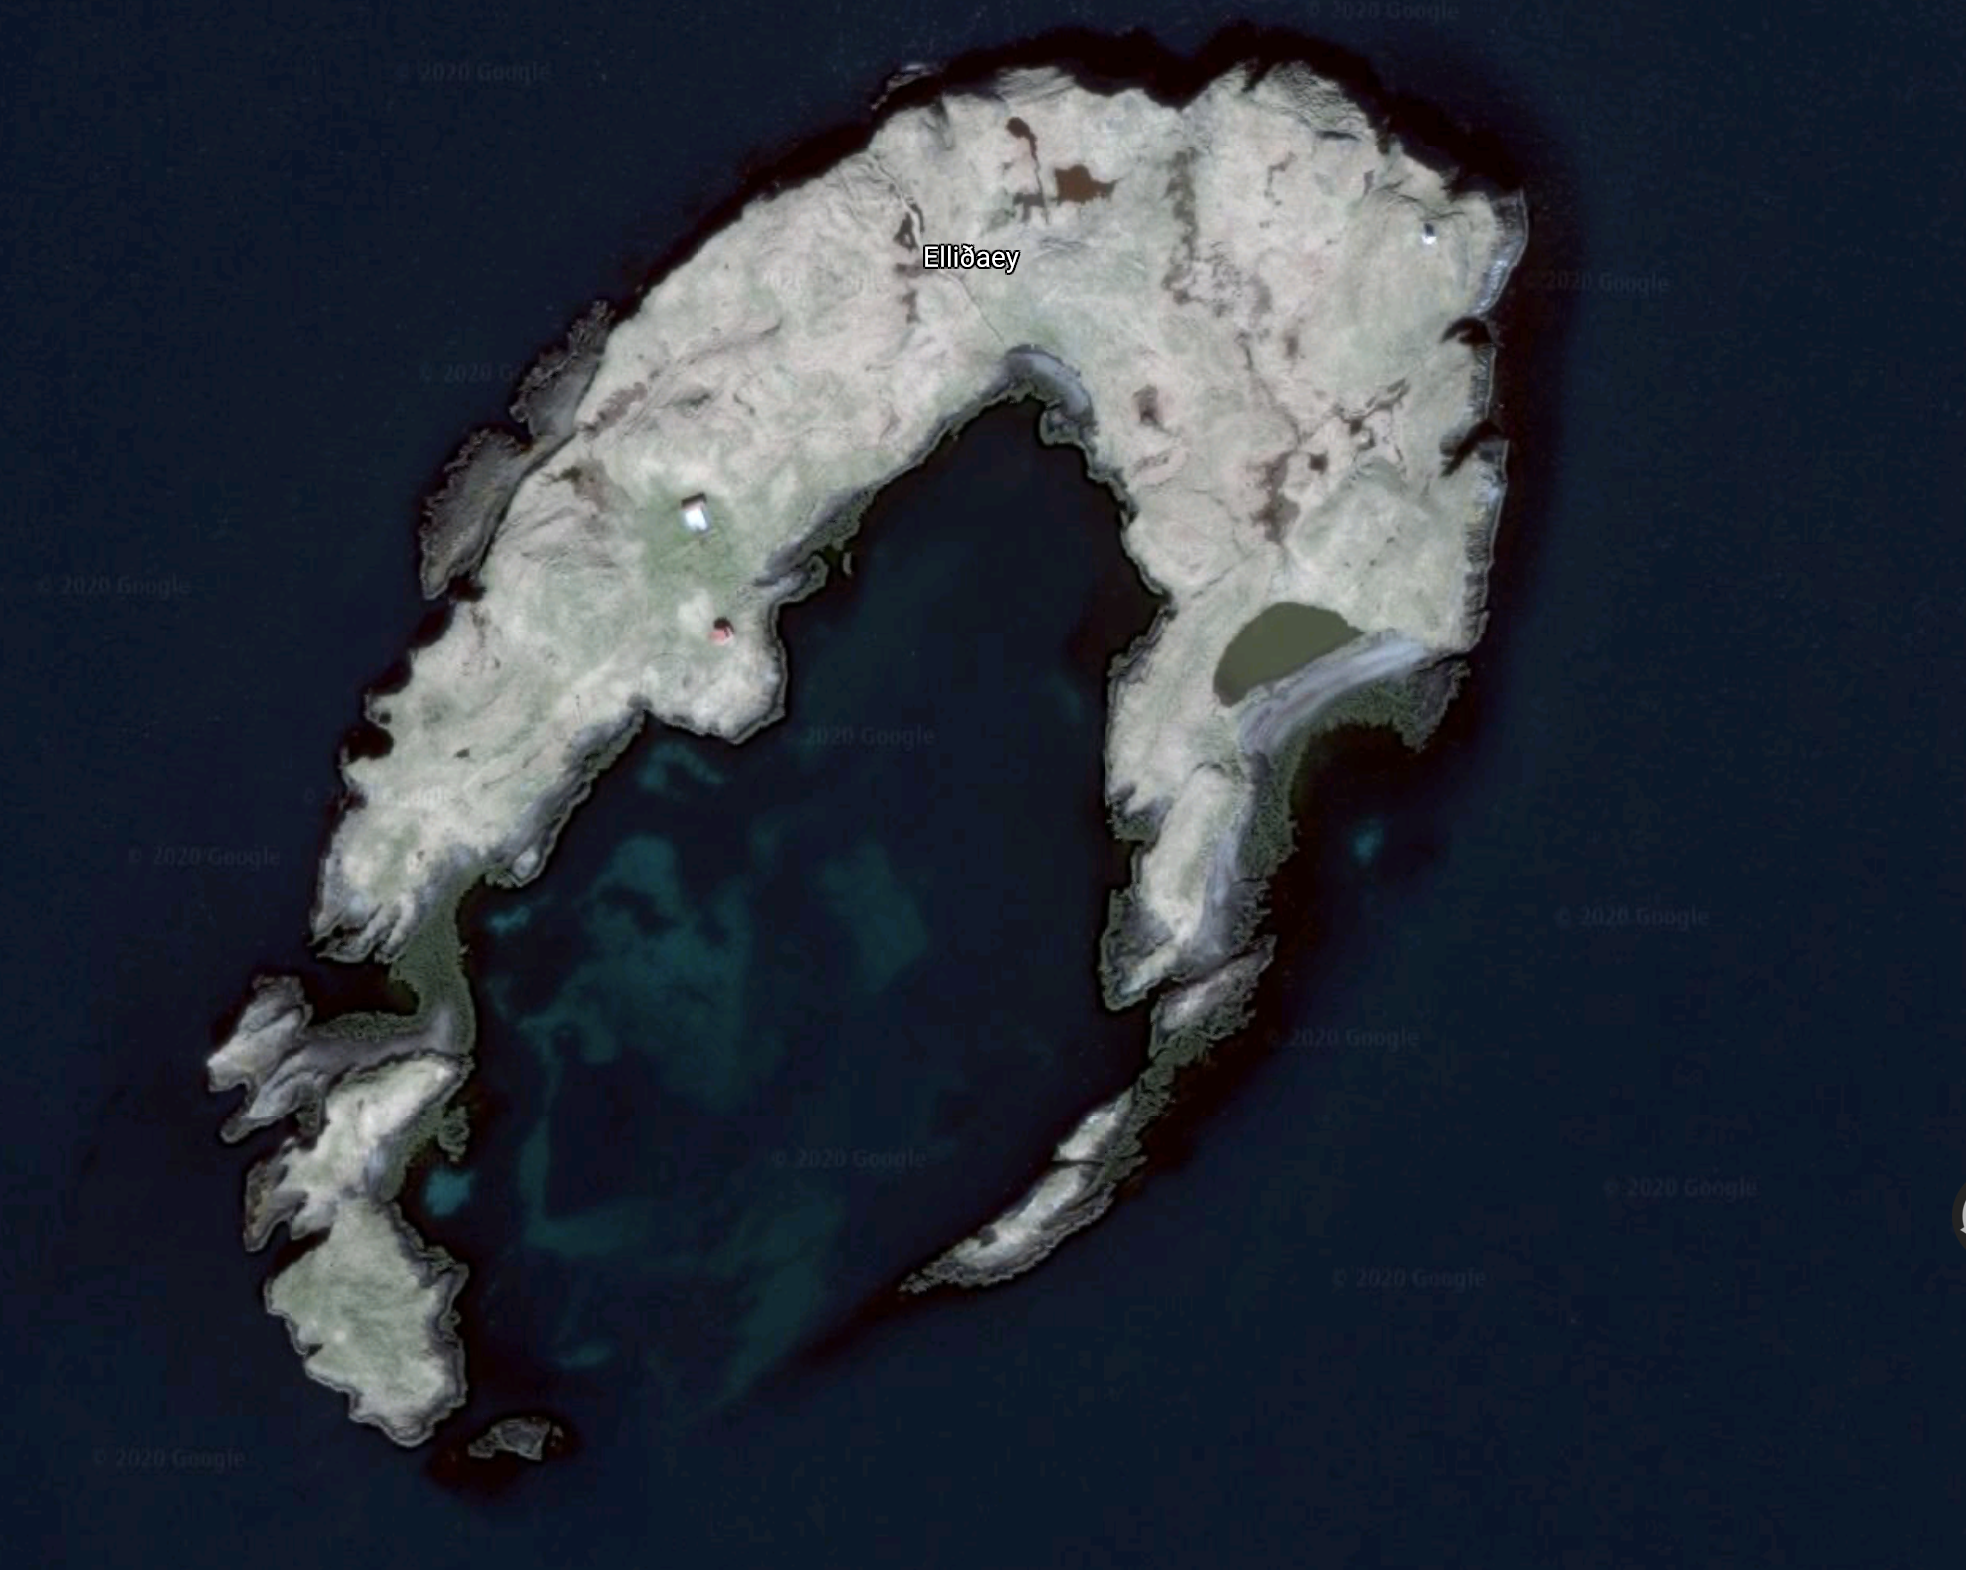 Elliðaey seen from a satellite